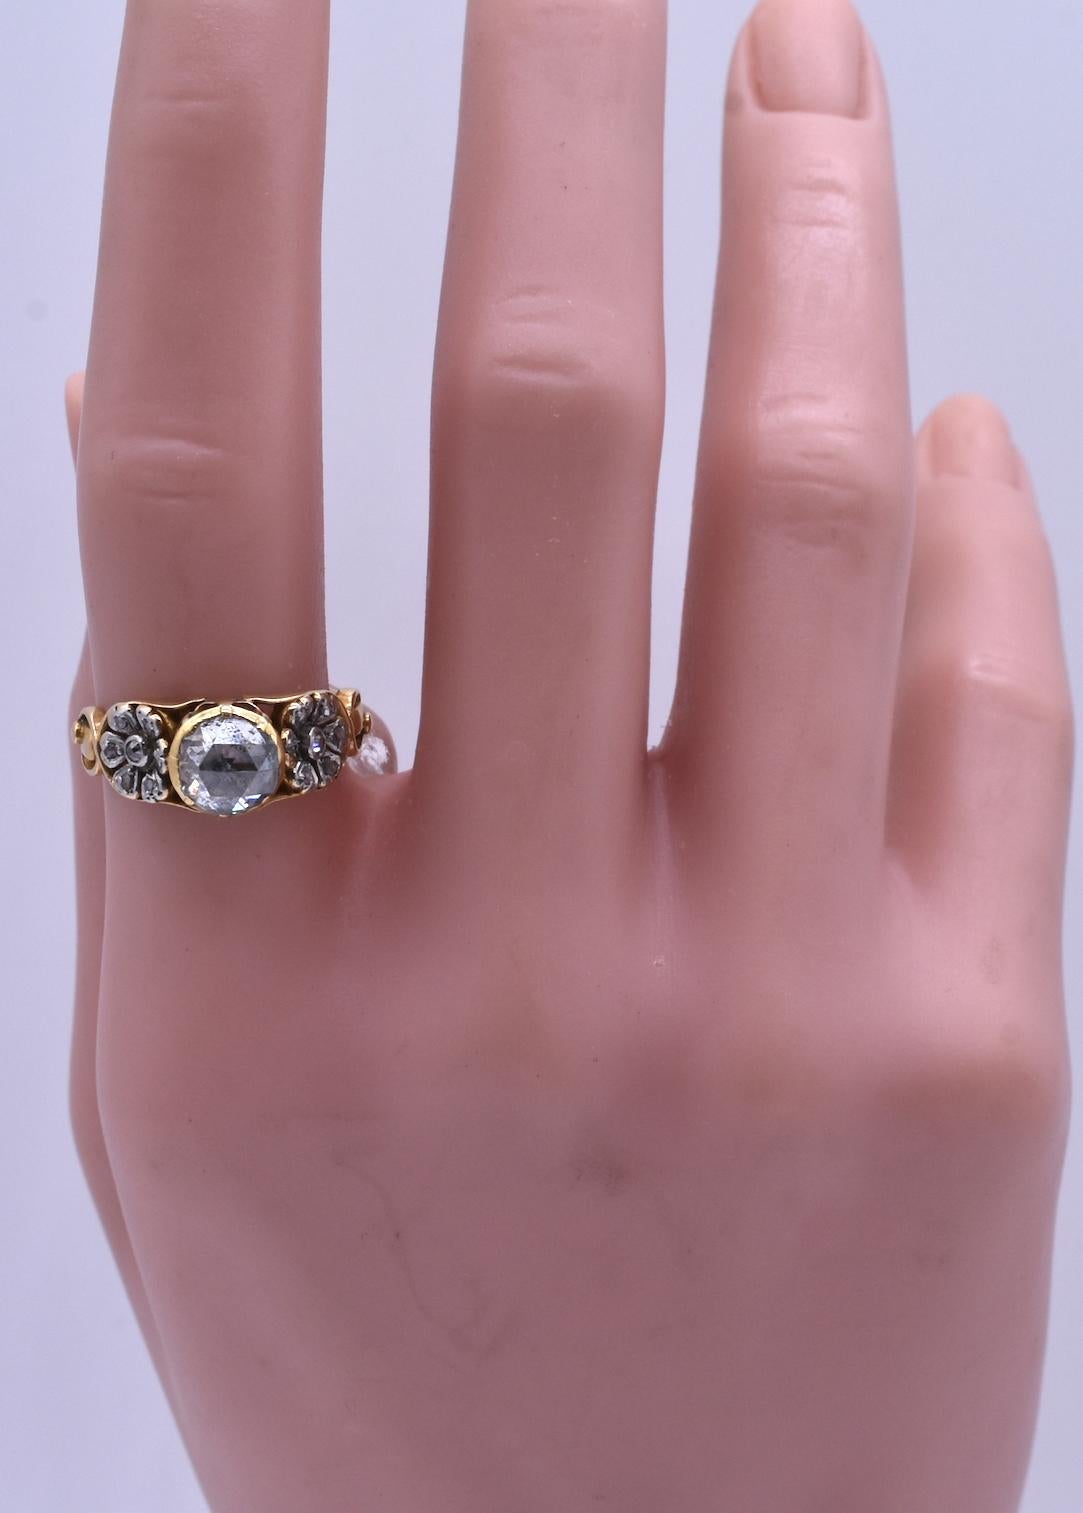 Antique Gold Rose Cut Diamond Ring with Platinum Floral Shoulders, C1895 5